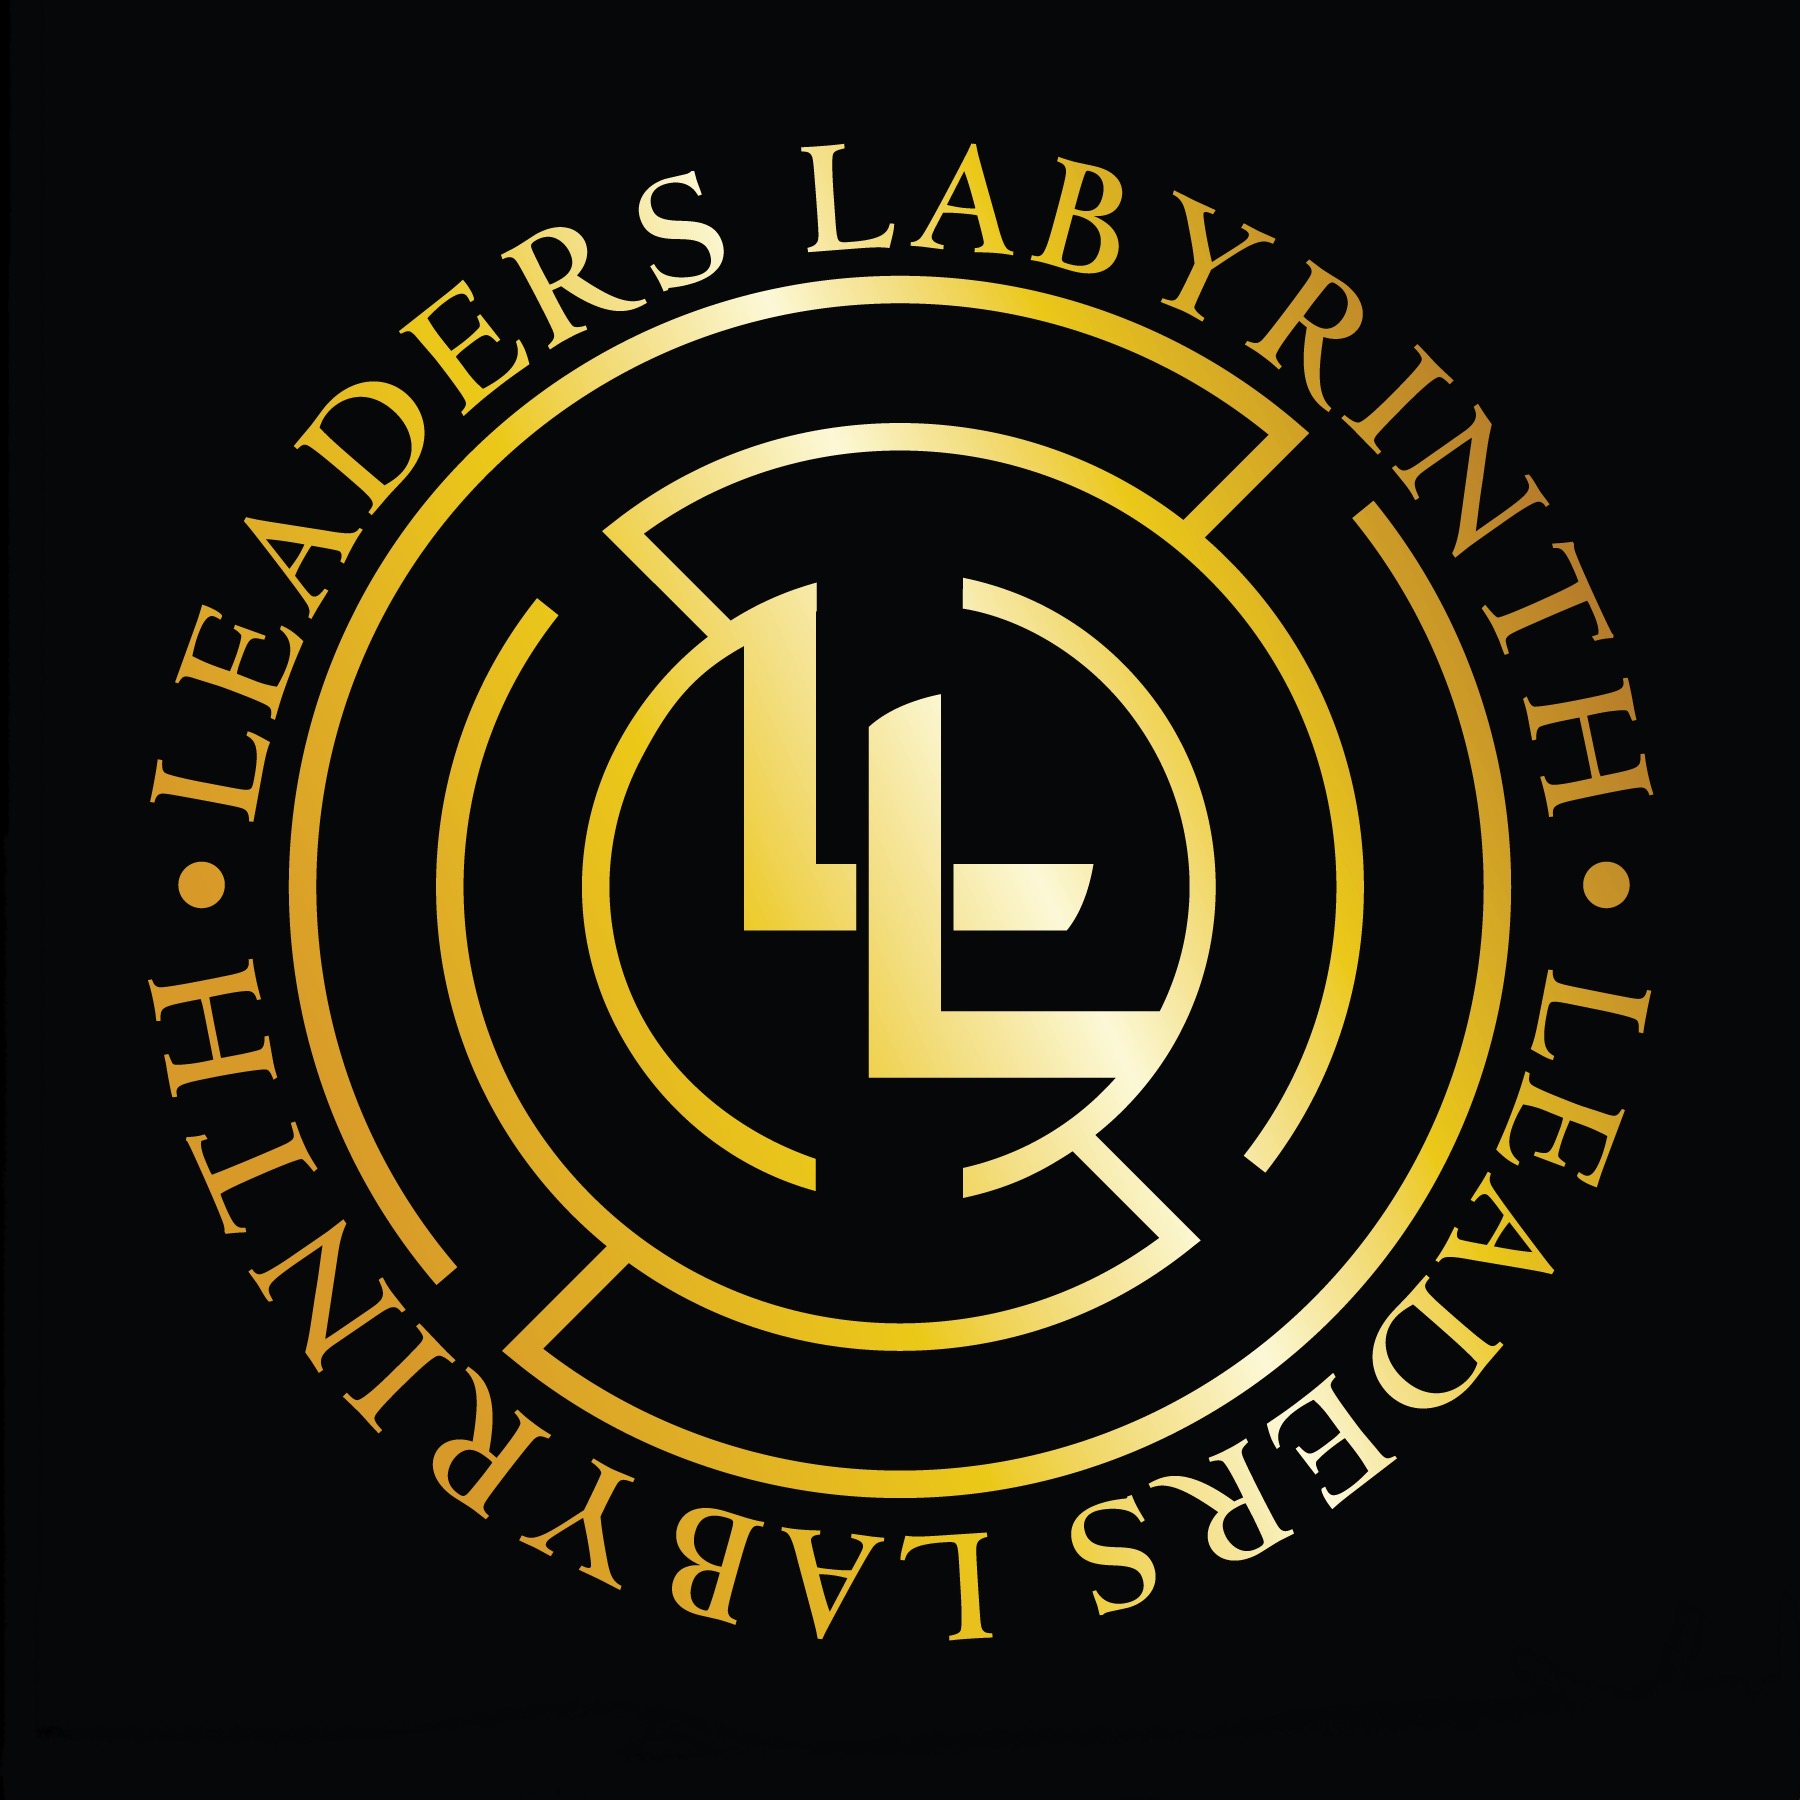 Artwork for Leaders Labyrinth